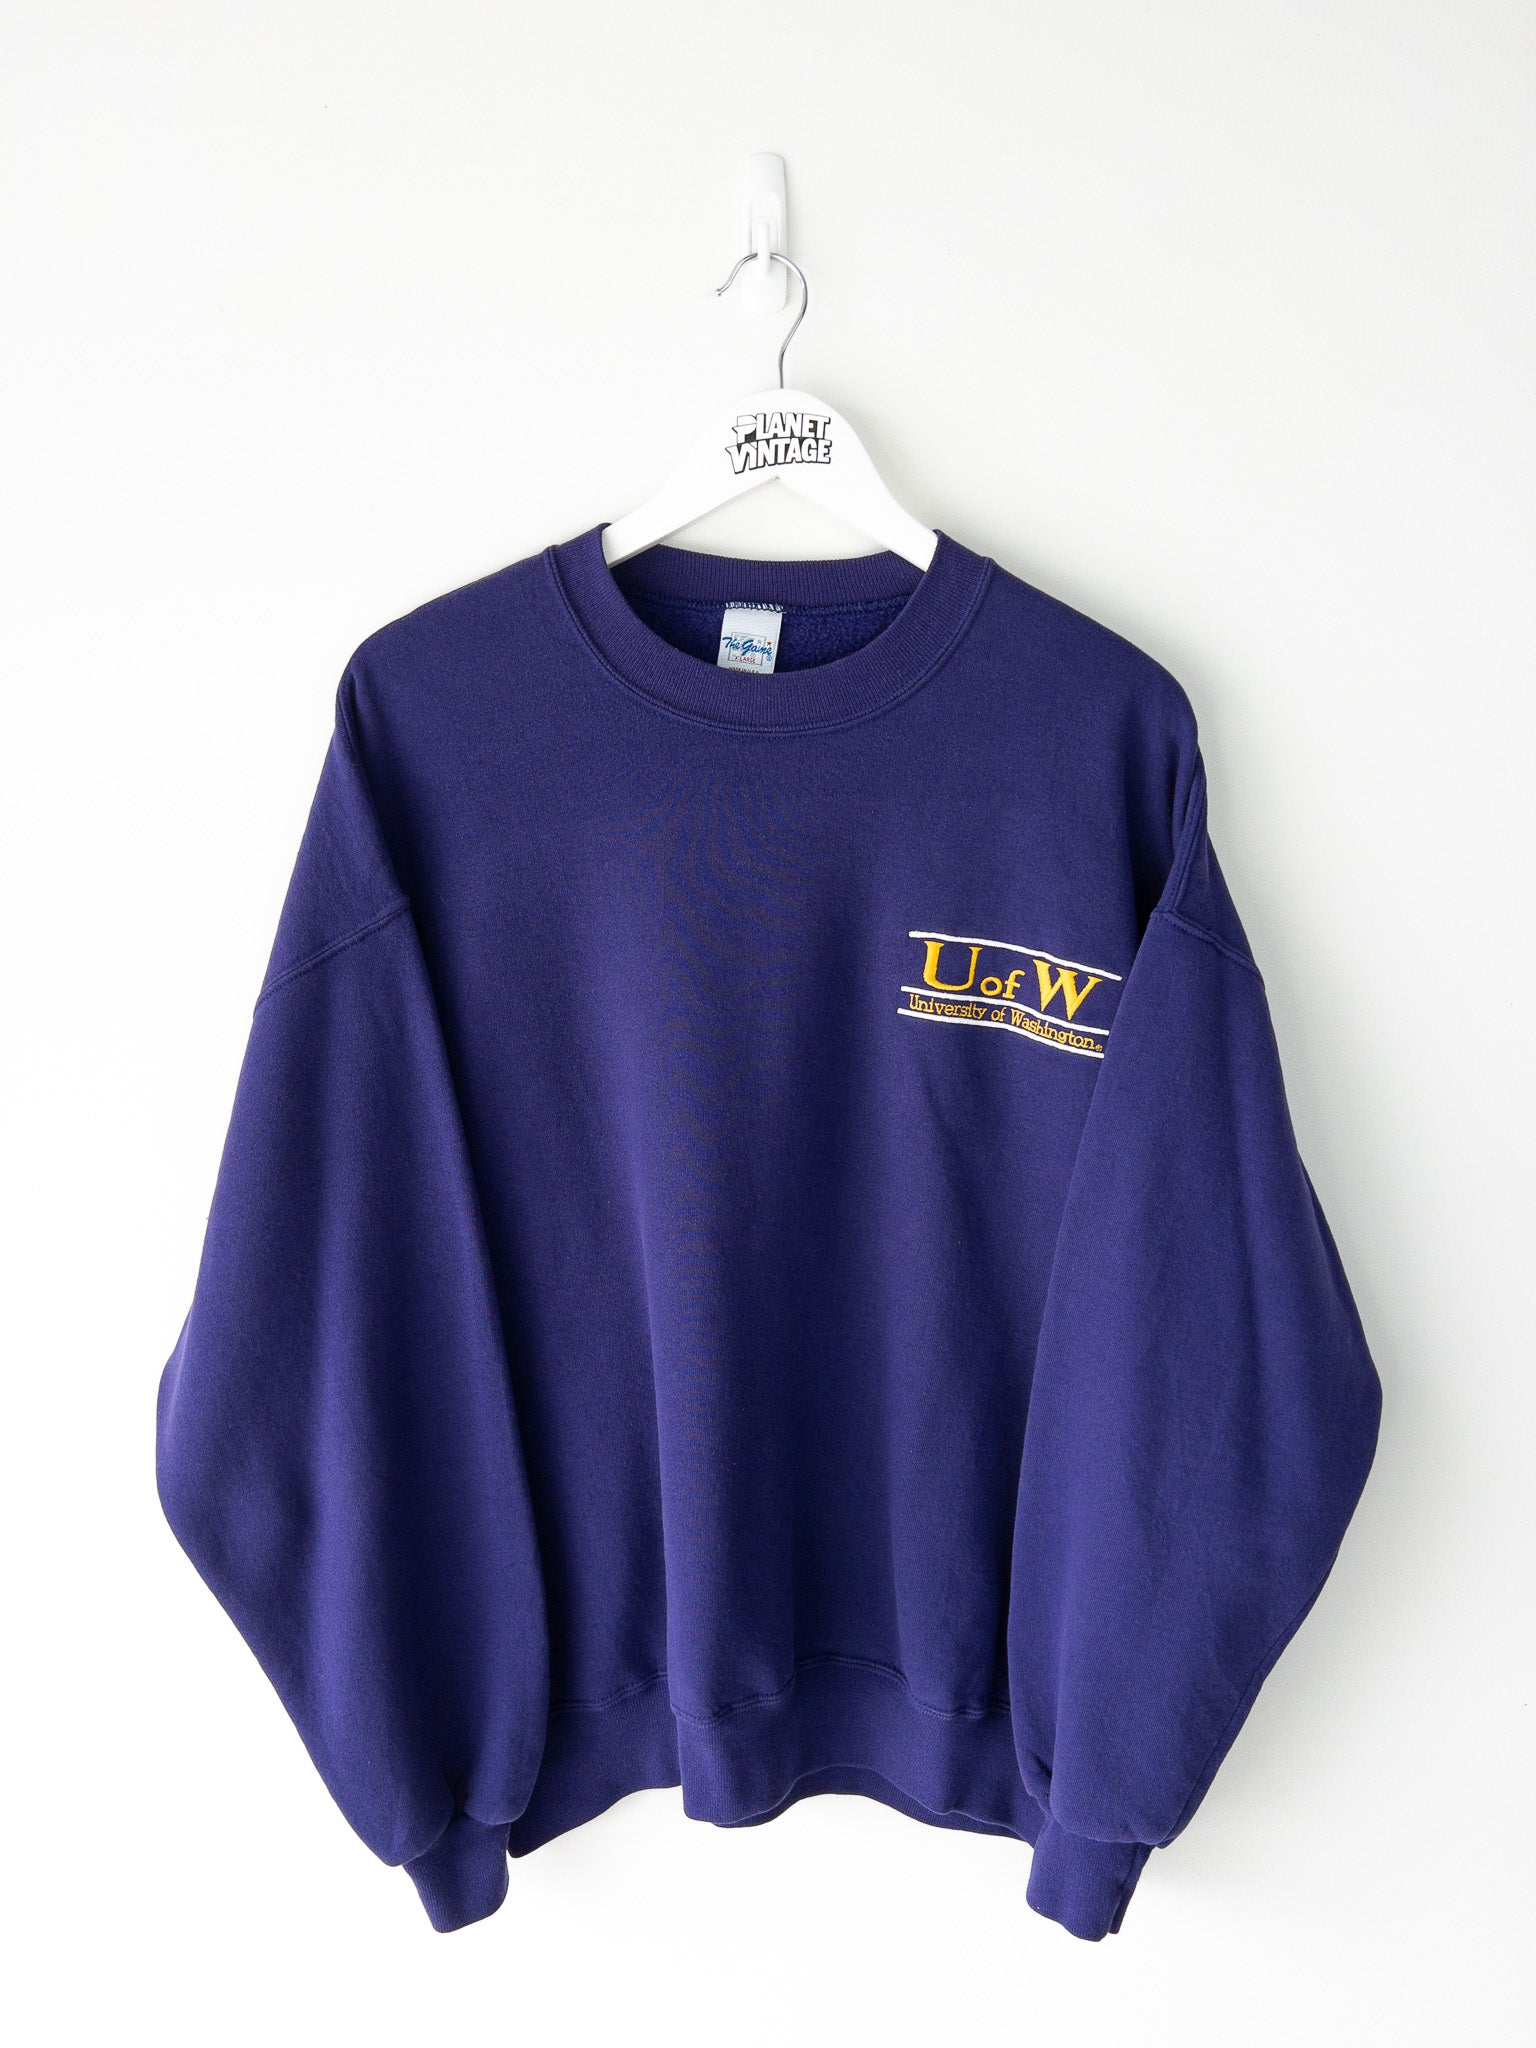 Vintage University of Washington Sweatshirt (XL)